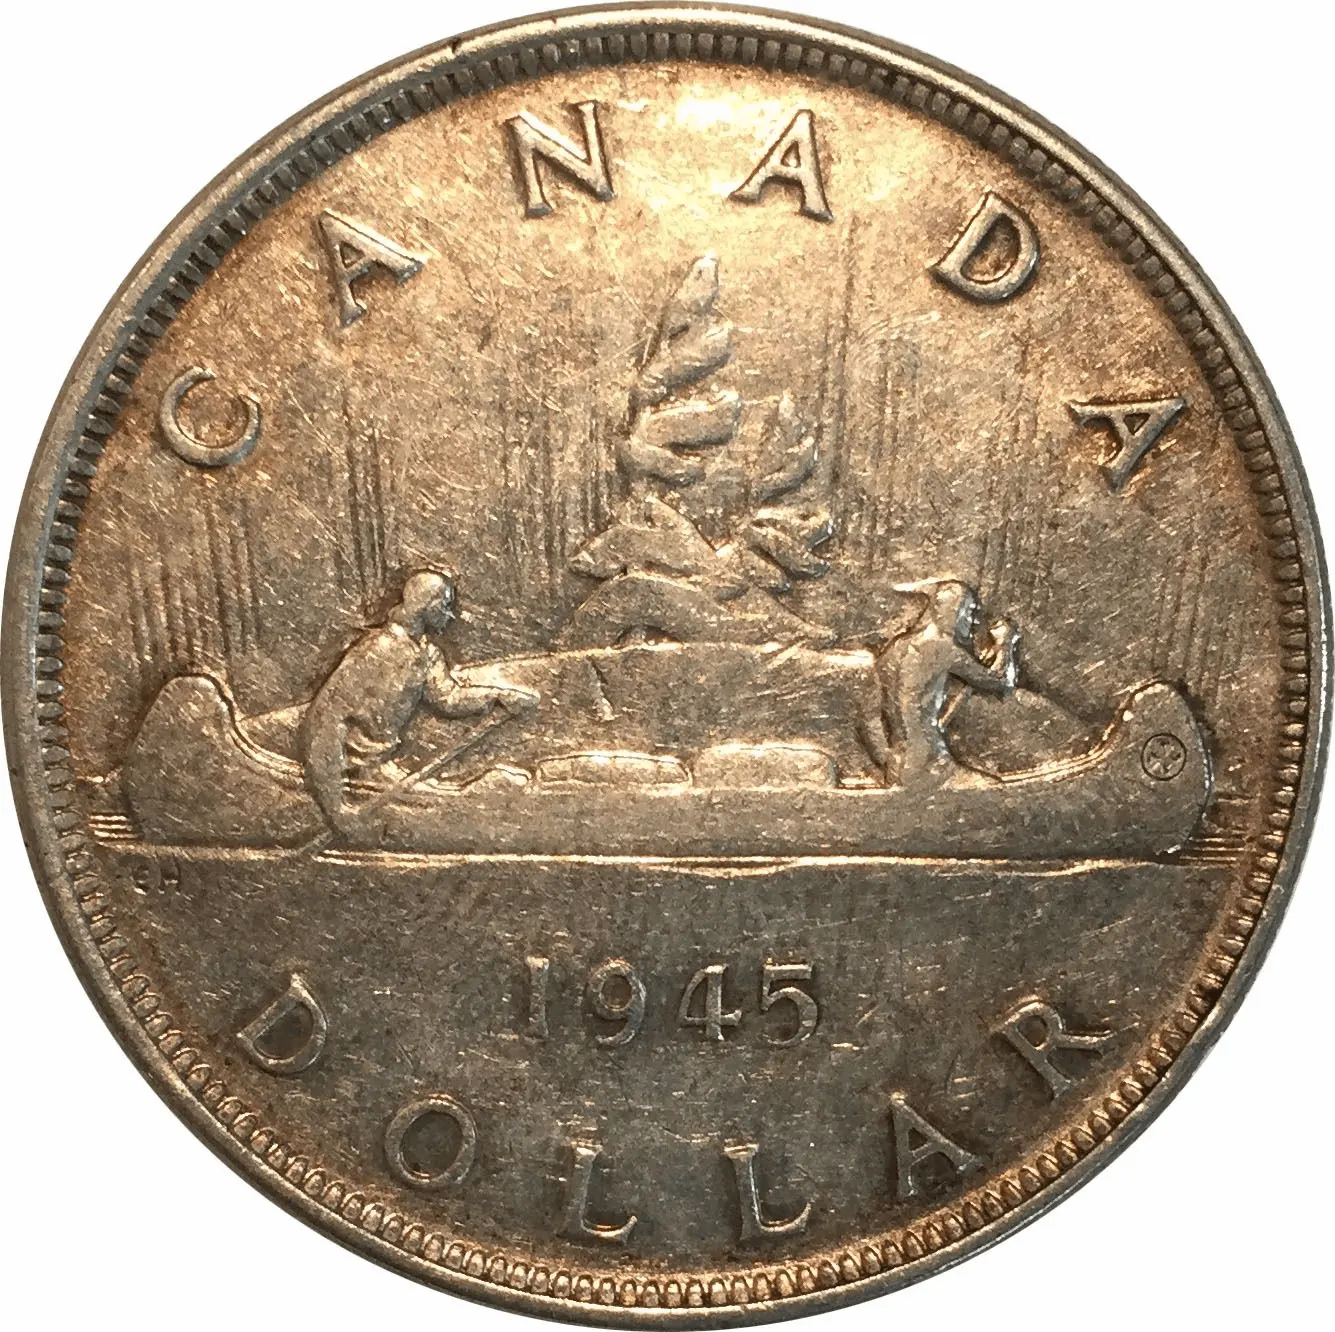 1945 Silver Dollar